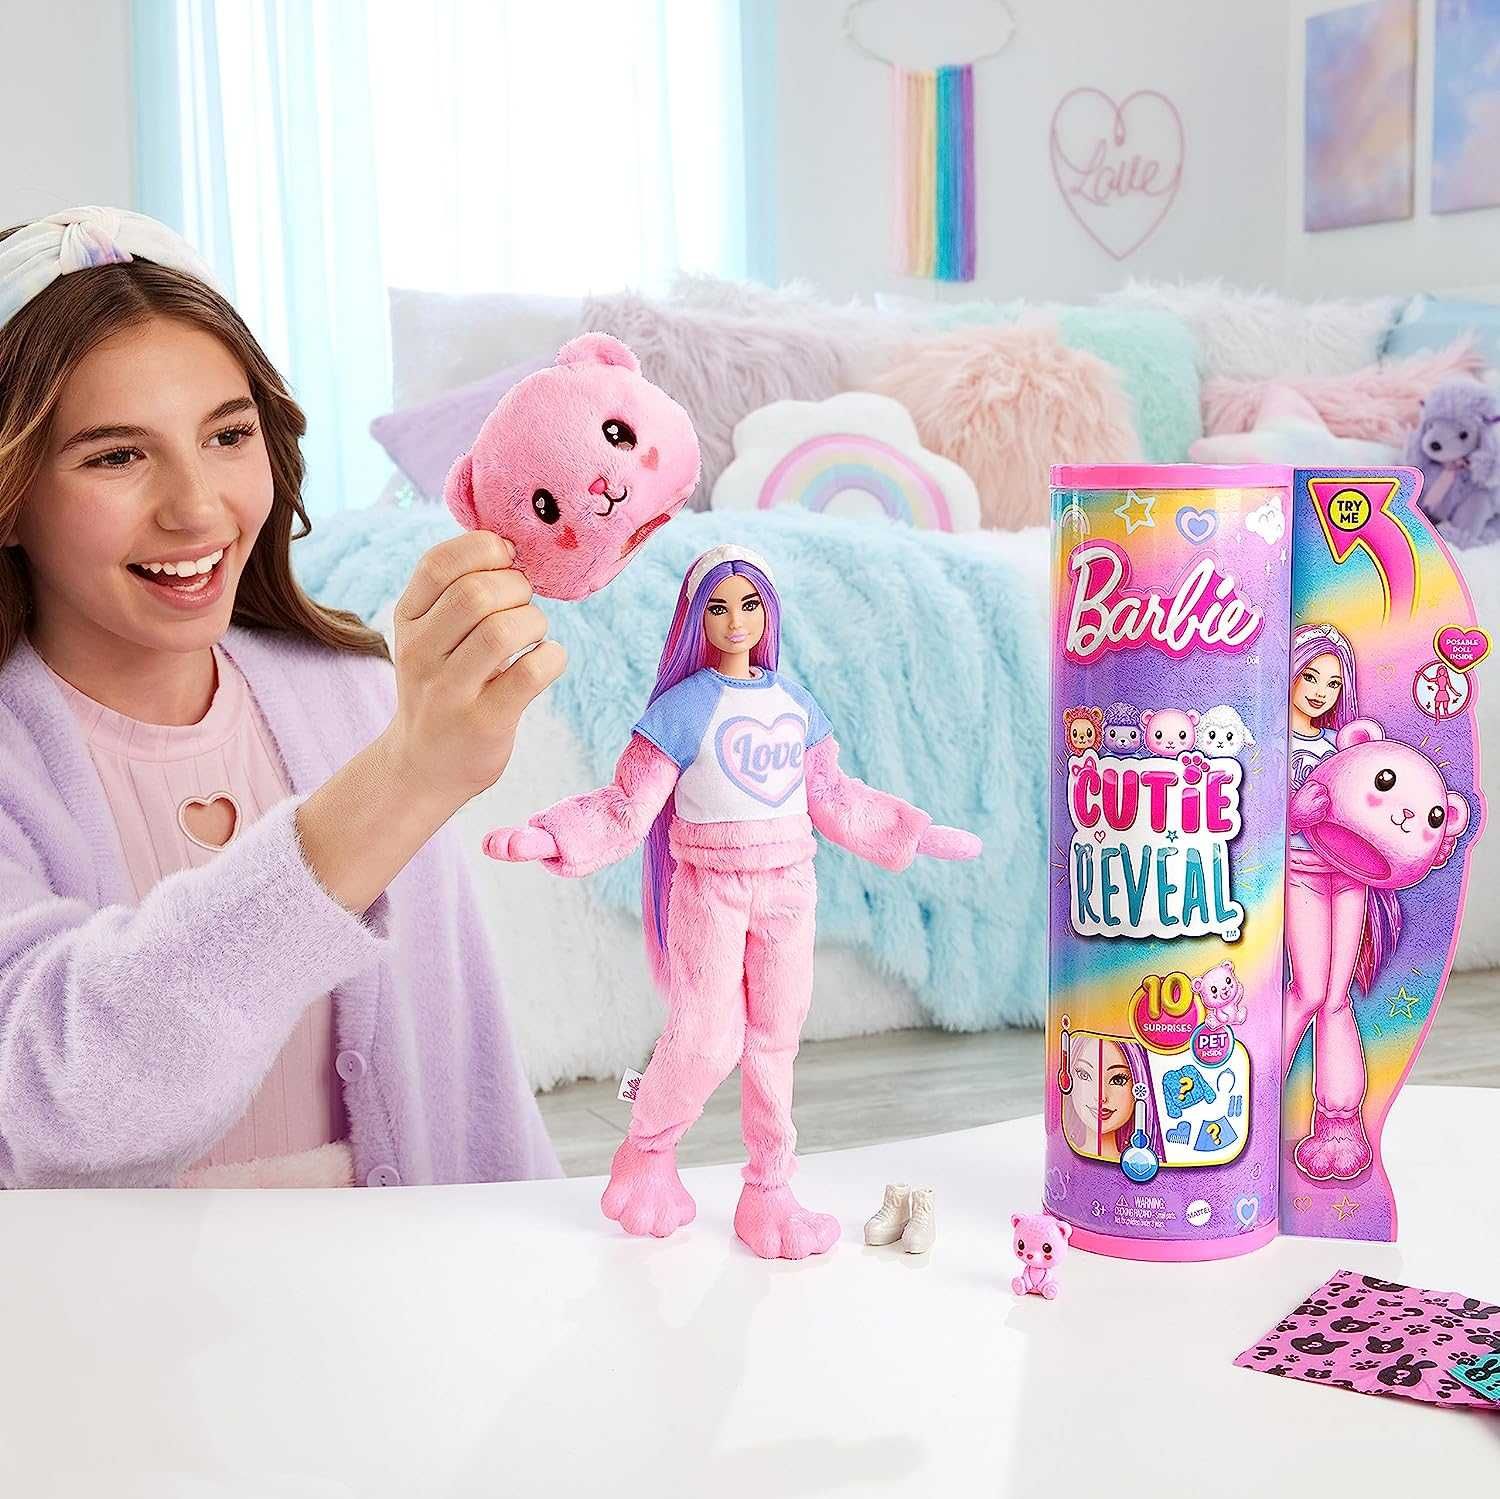 Barbie Cutie Reveal Doll with Pink Hair & Teddy Bear Барбі Ведмедик